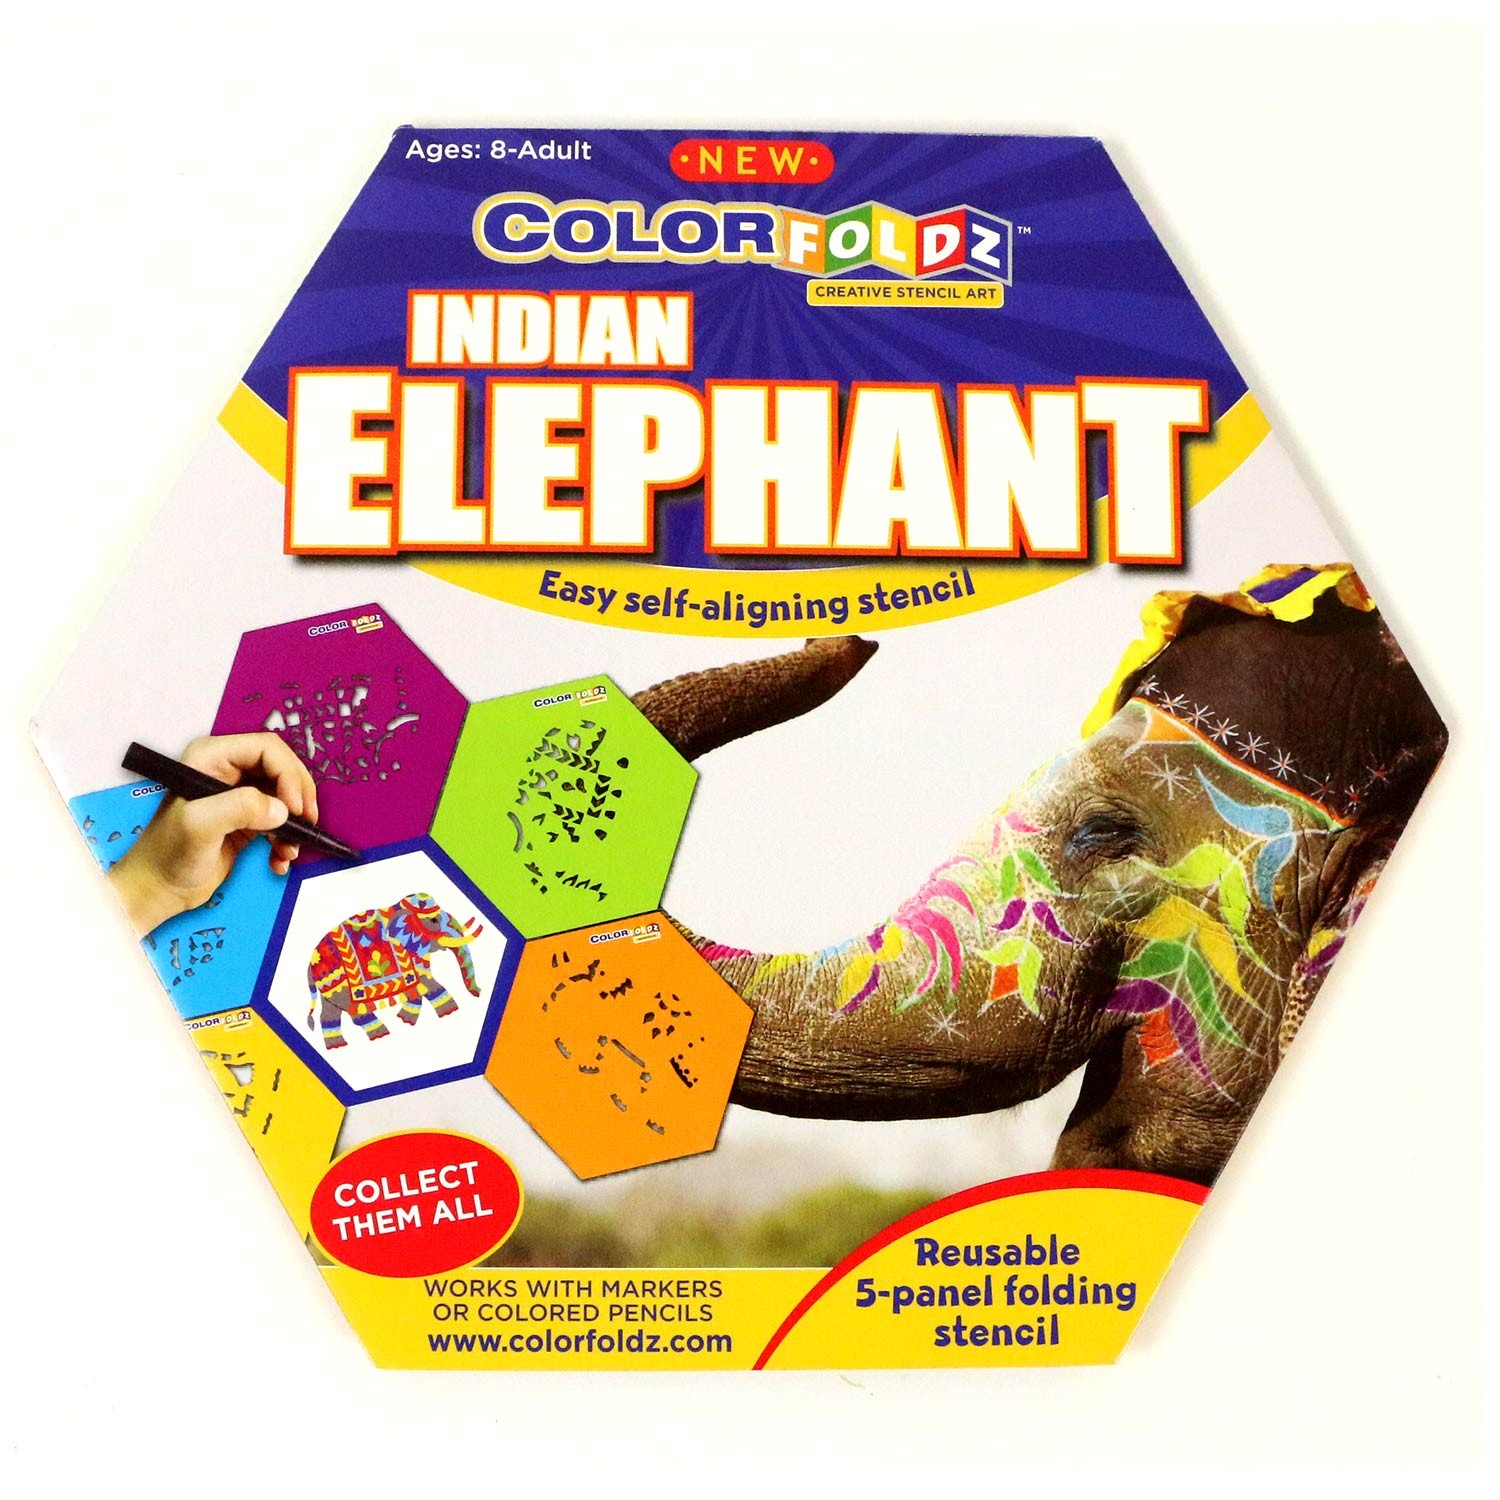 https://colorfoldz.com/media/catalog/product/cache/1/image/9df78eab33525d08d6e5fb8d27136e95/e/l/elephant-stencil-coloring-books-for-kids-colorfoldz.jpg